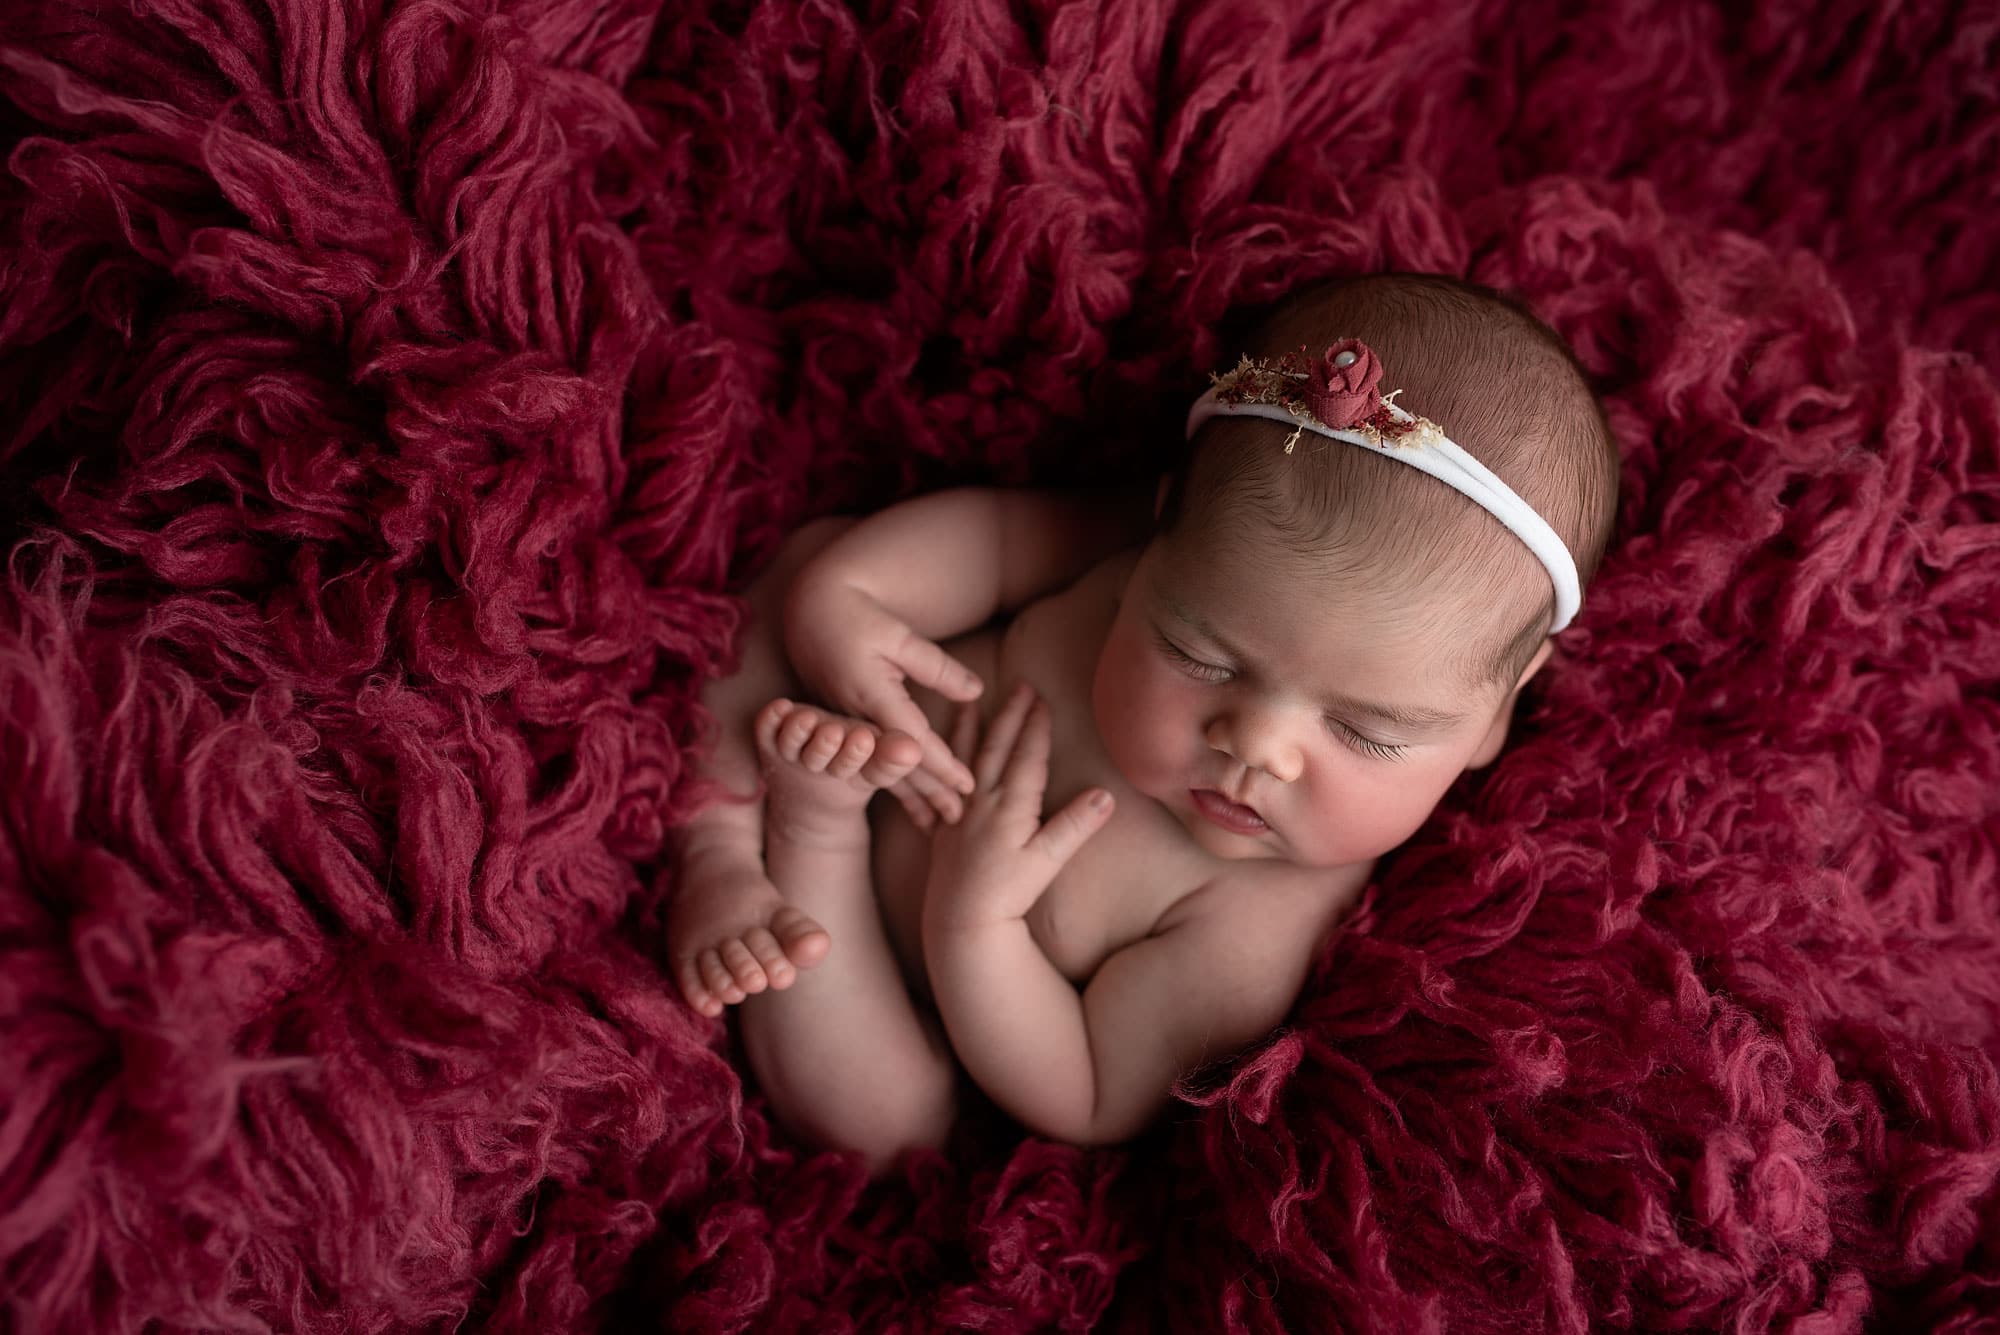 Newborn baby photography pose Tianna J-Williams Photography